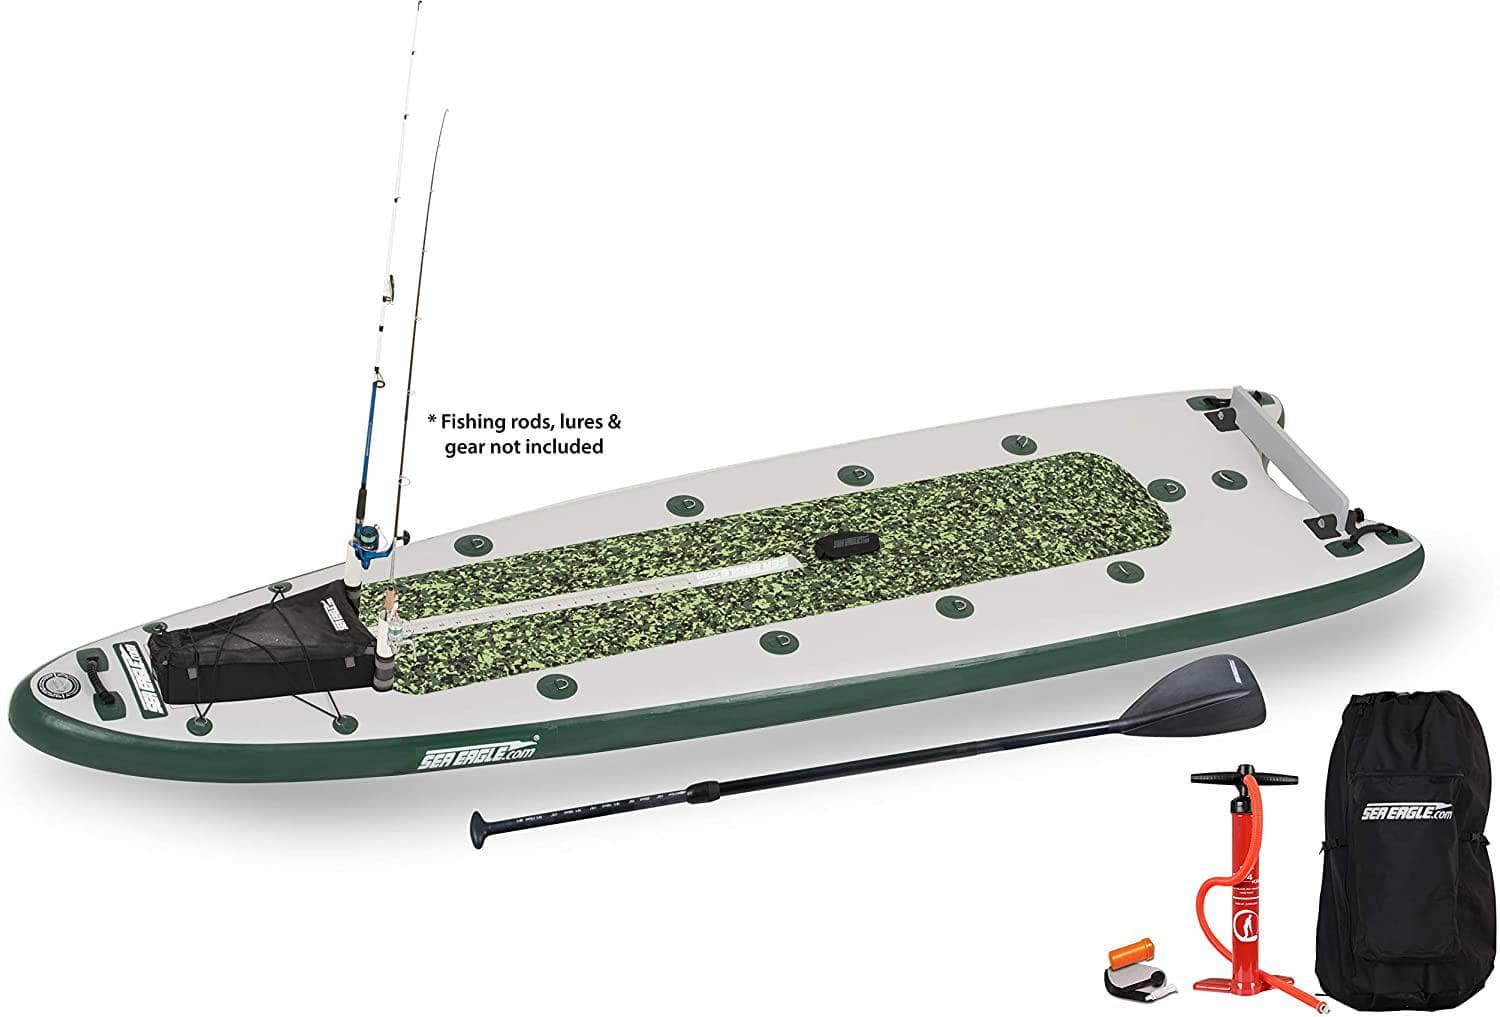 Sea Eagle FishSUP 126 Inflatable Fishing Paddle Board - Start Up